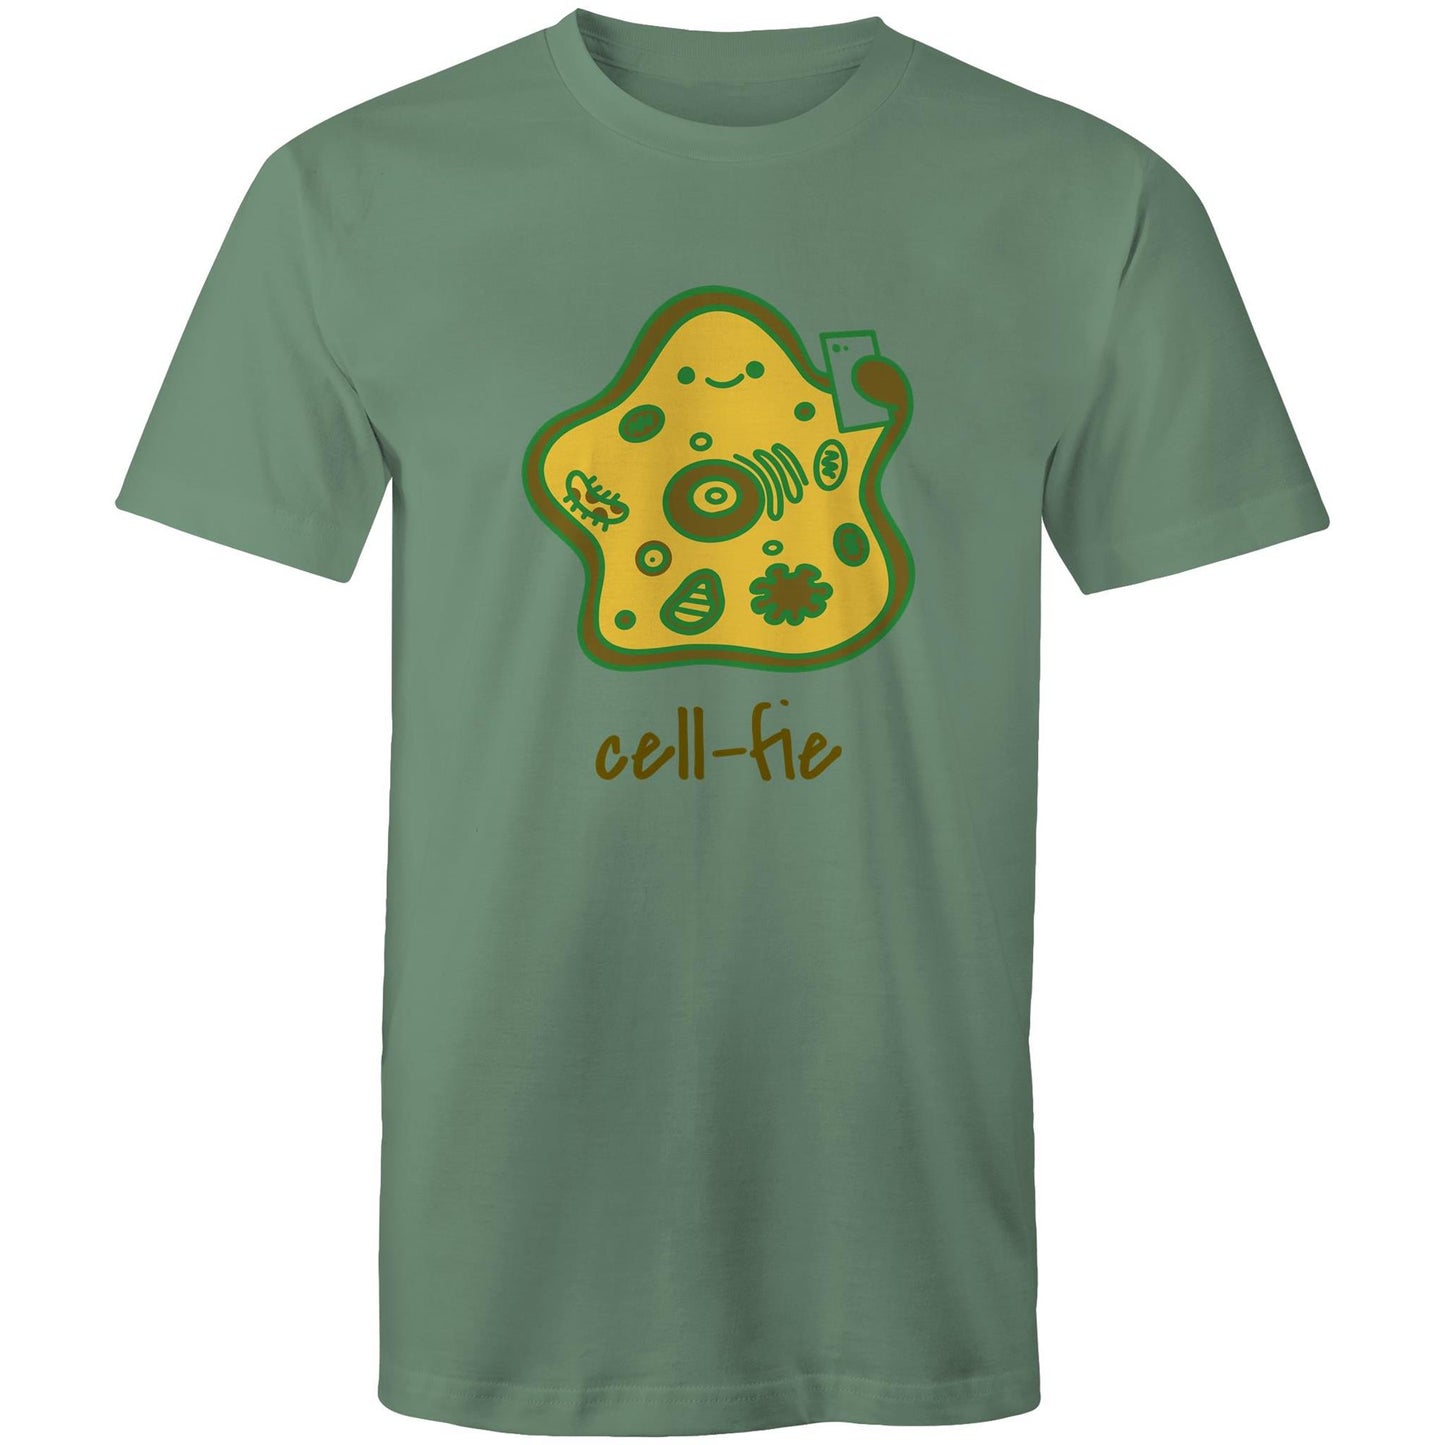 Cell-fie - Mens T-Shirt Sage Mens T-shirt Science